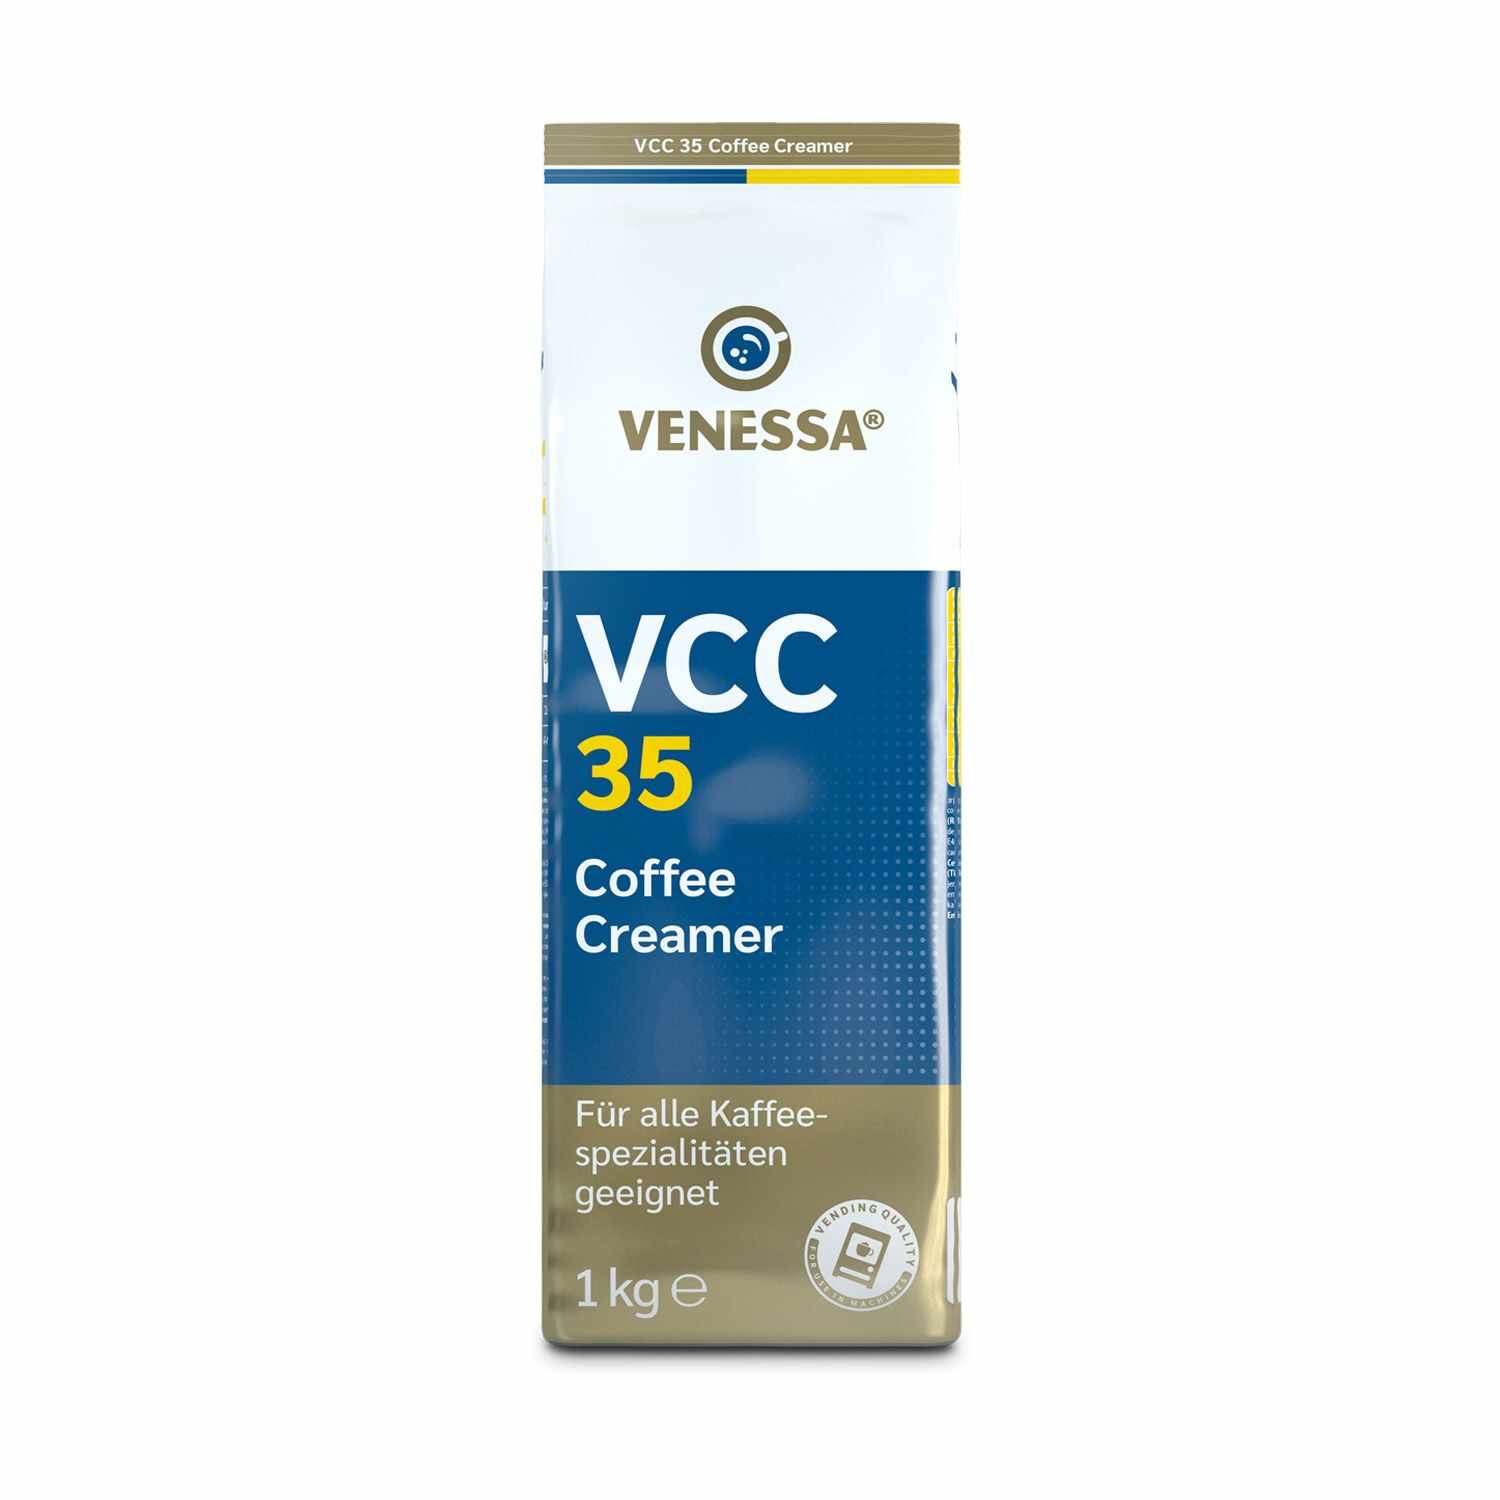 Venessa Coffee Creamer VCC35 - 1kg